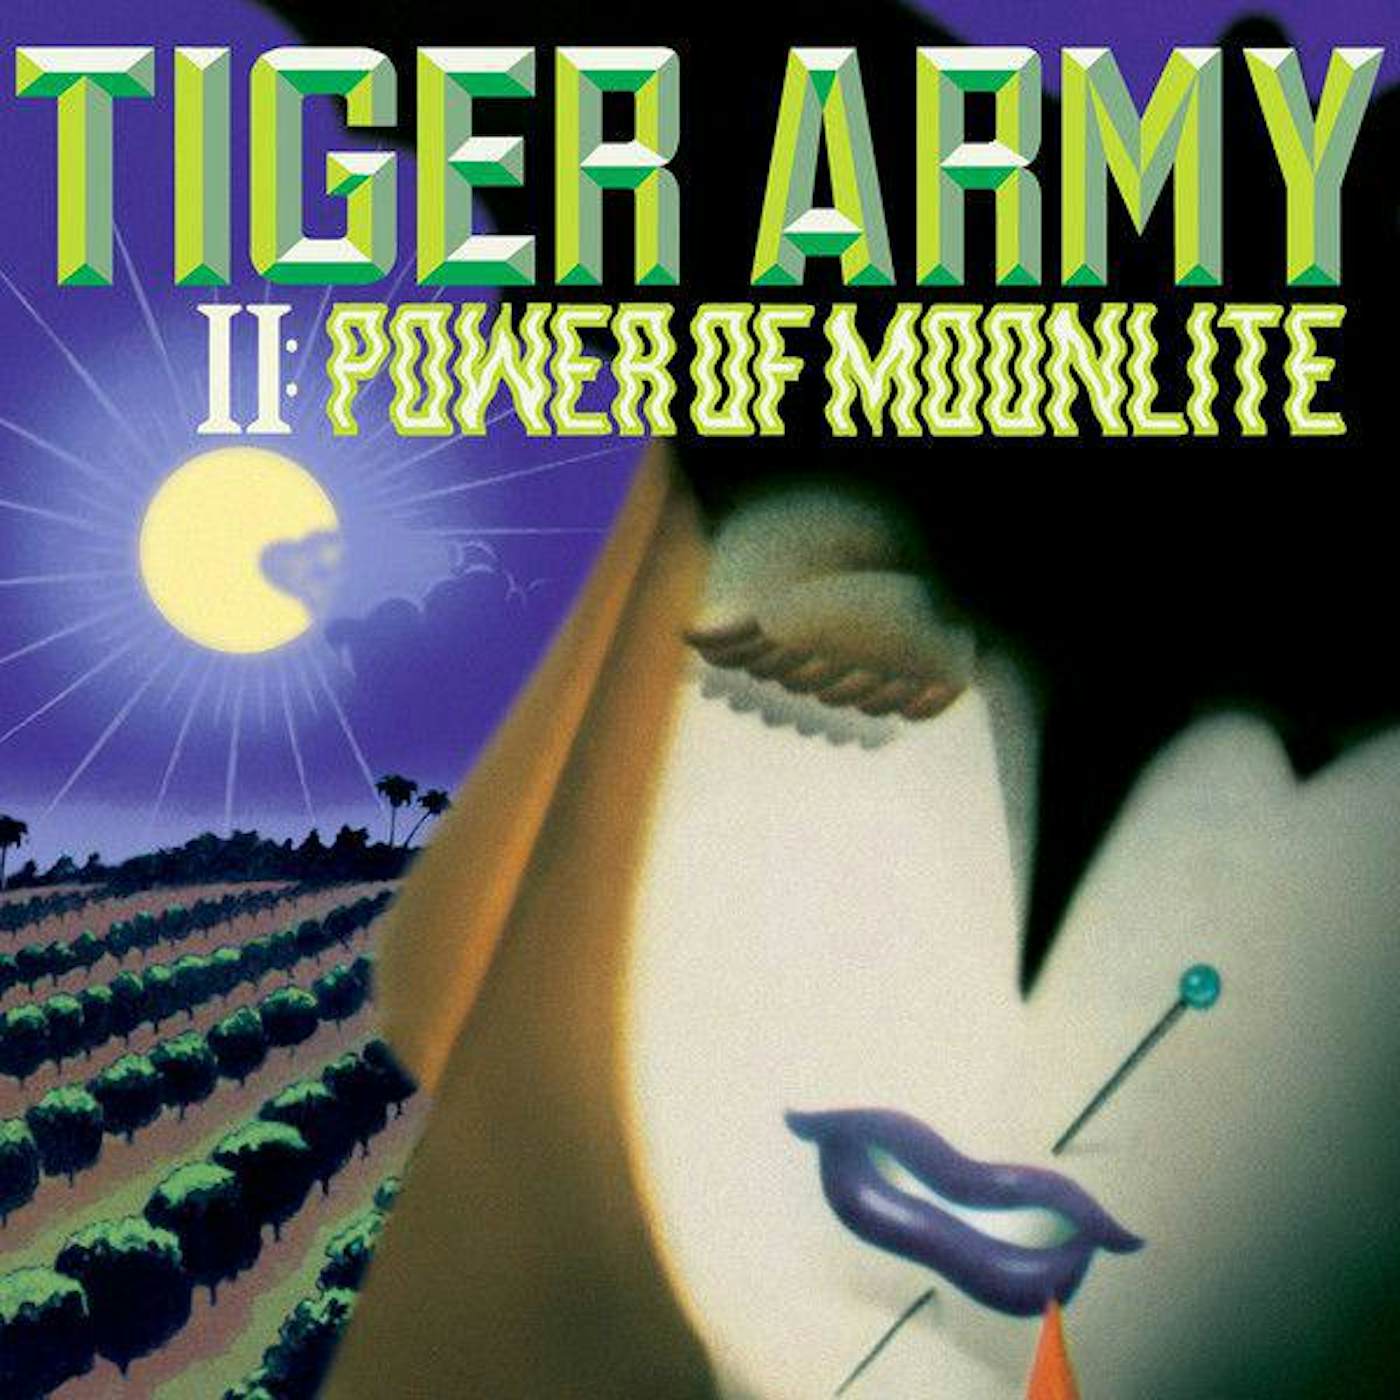 Tiger Army II: Power Of Moonlite Vinyl Record